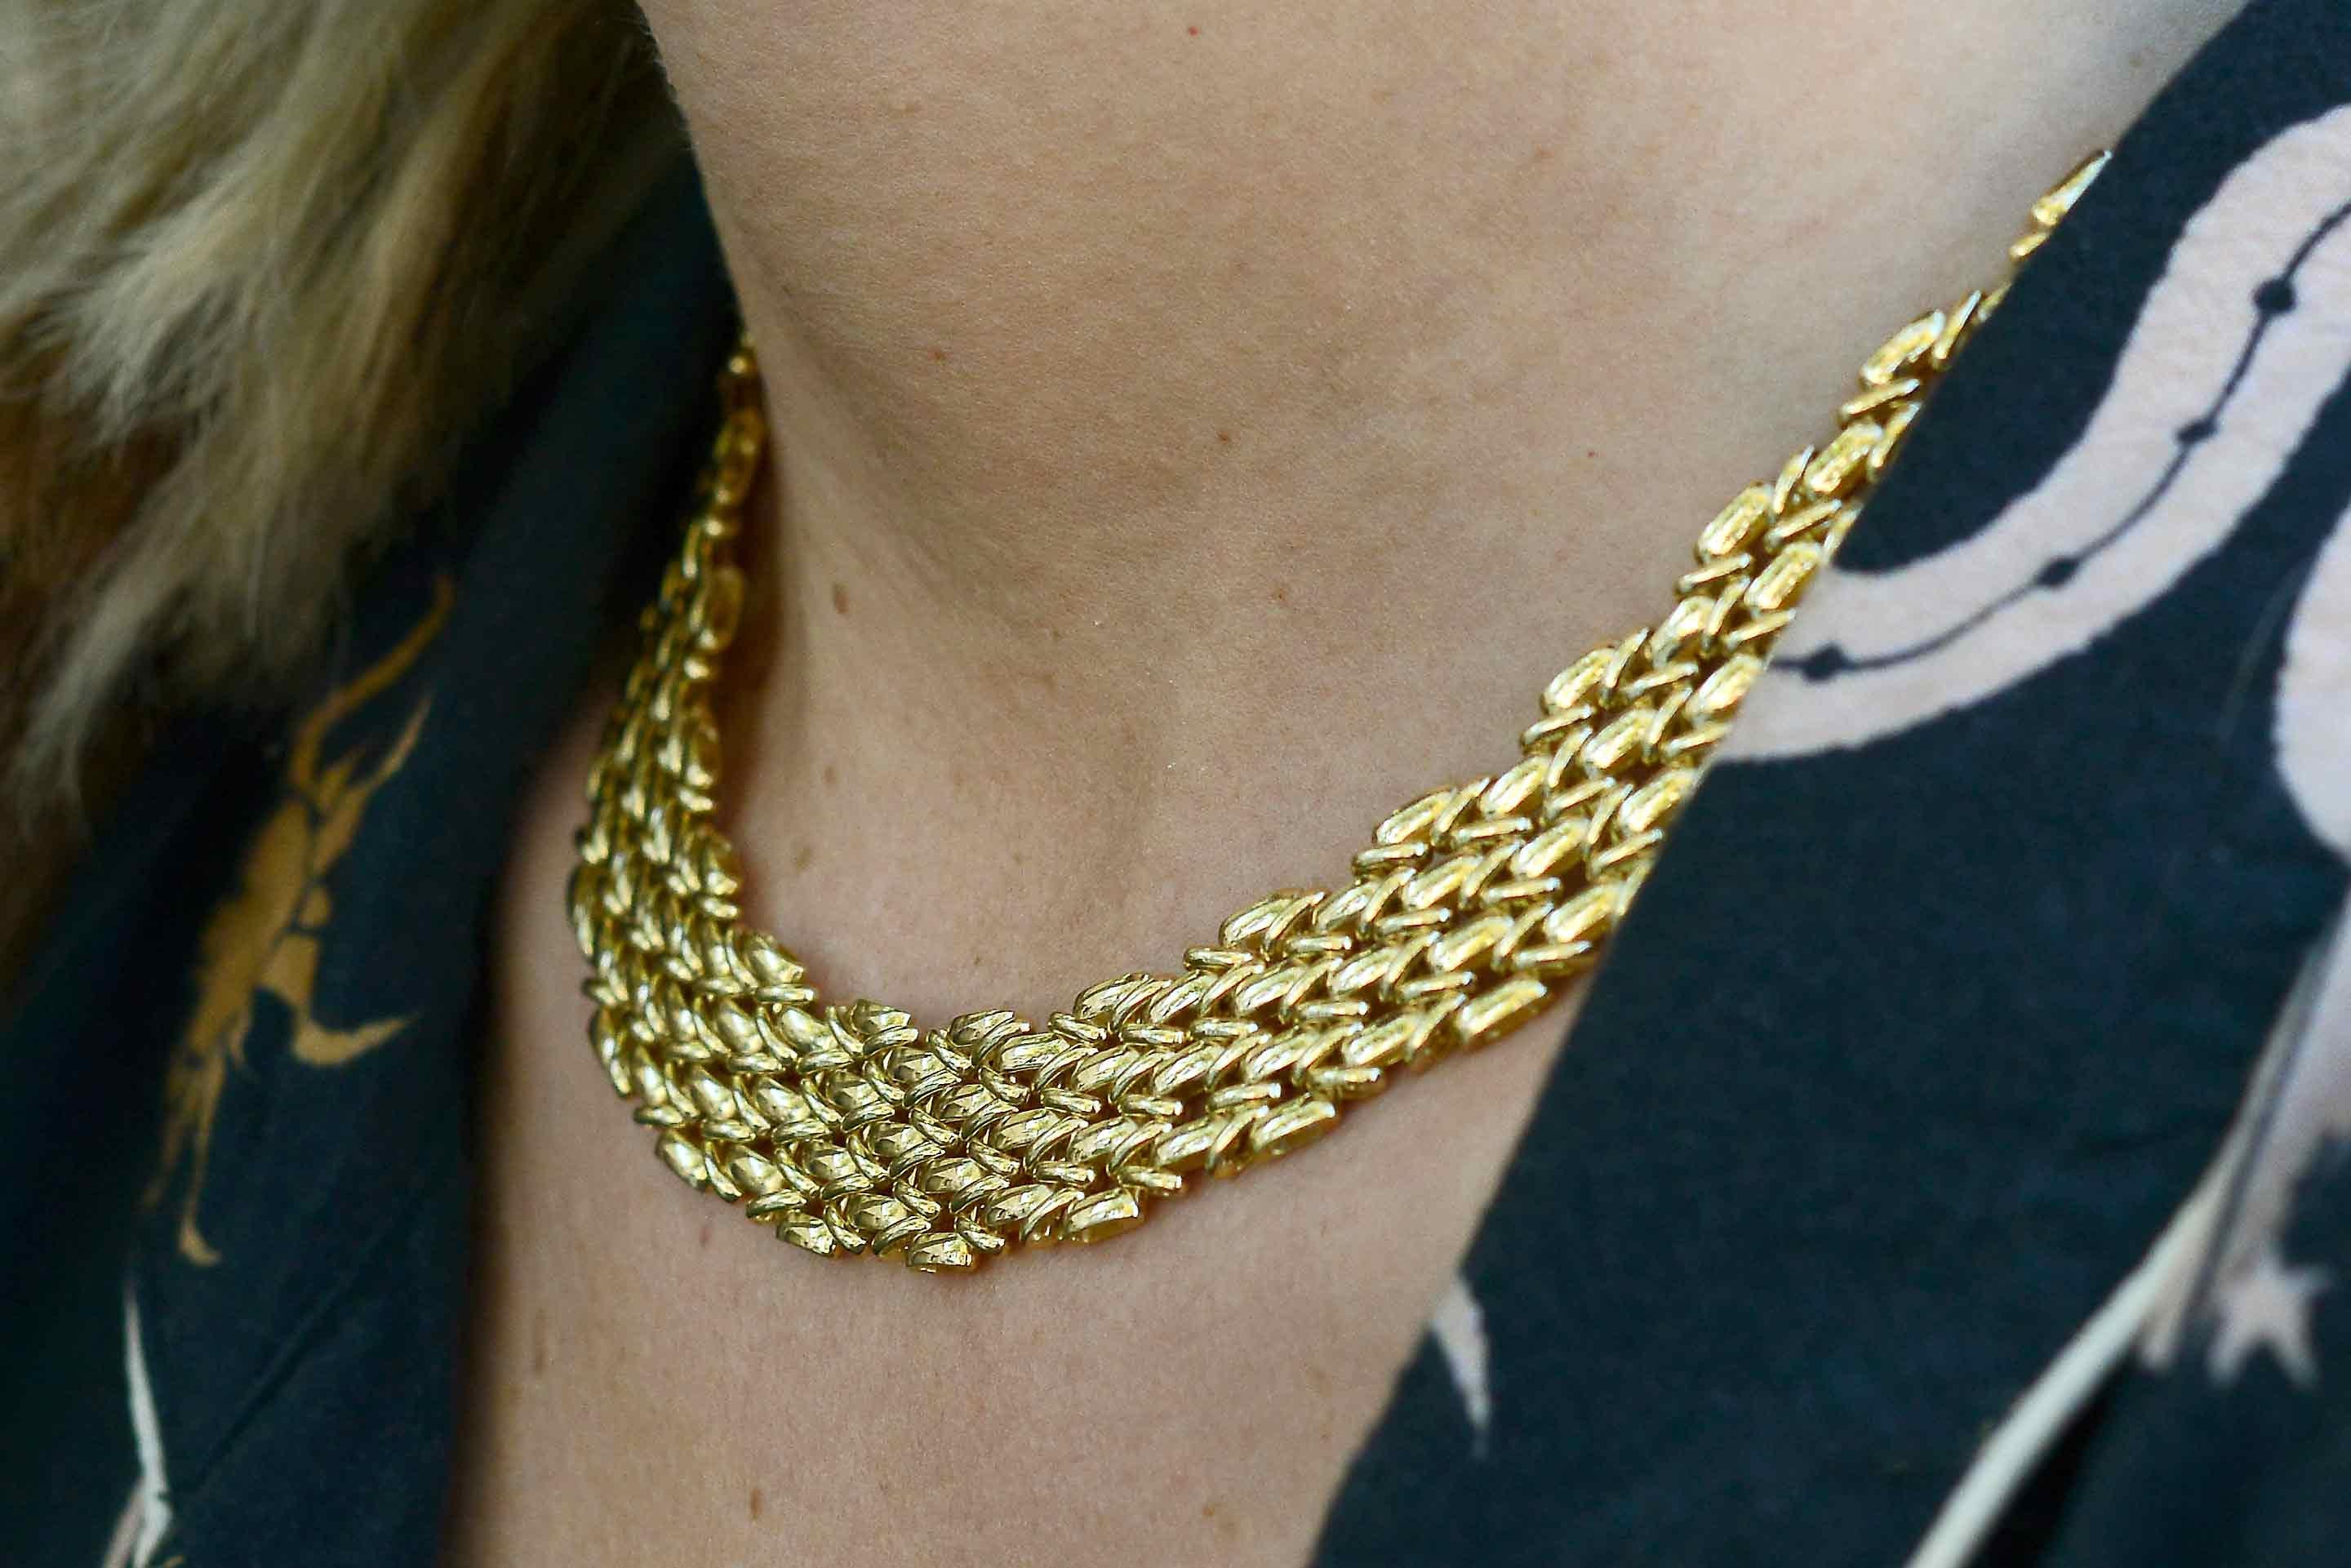 14k gold cartier style choker necklace